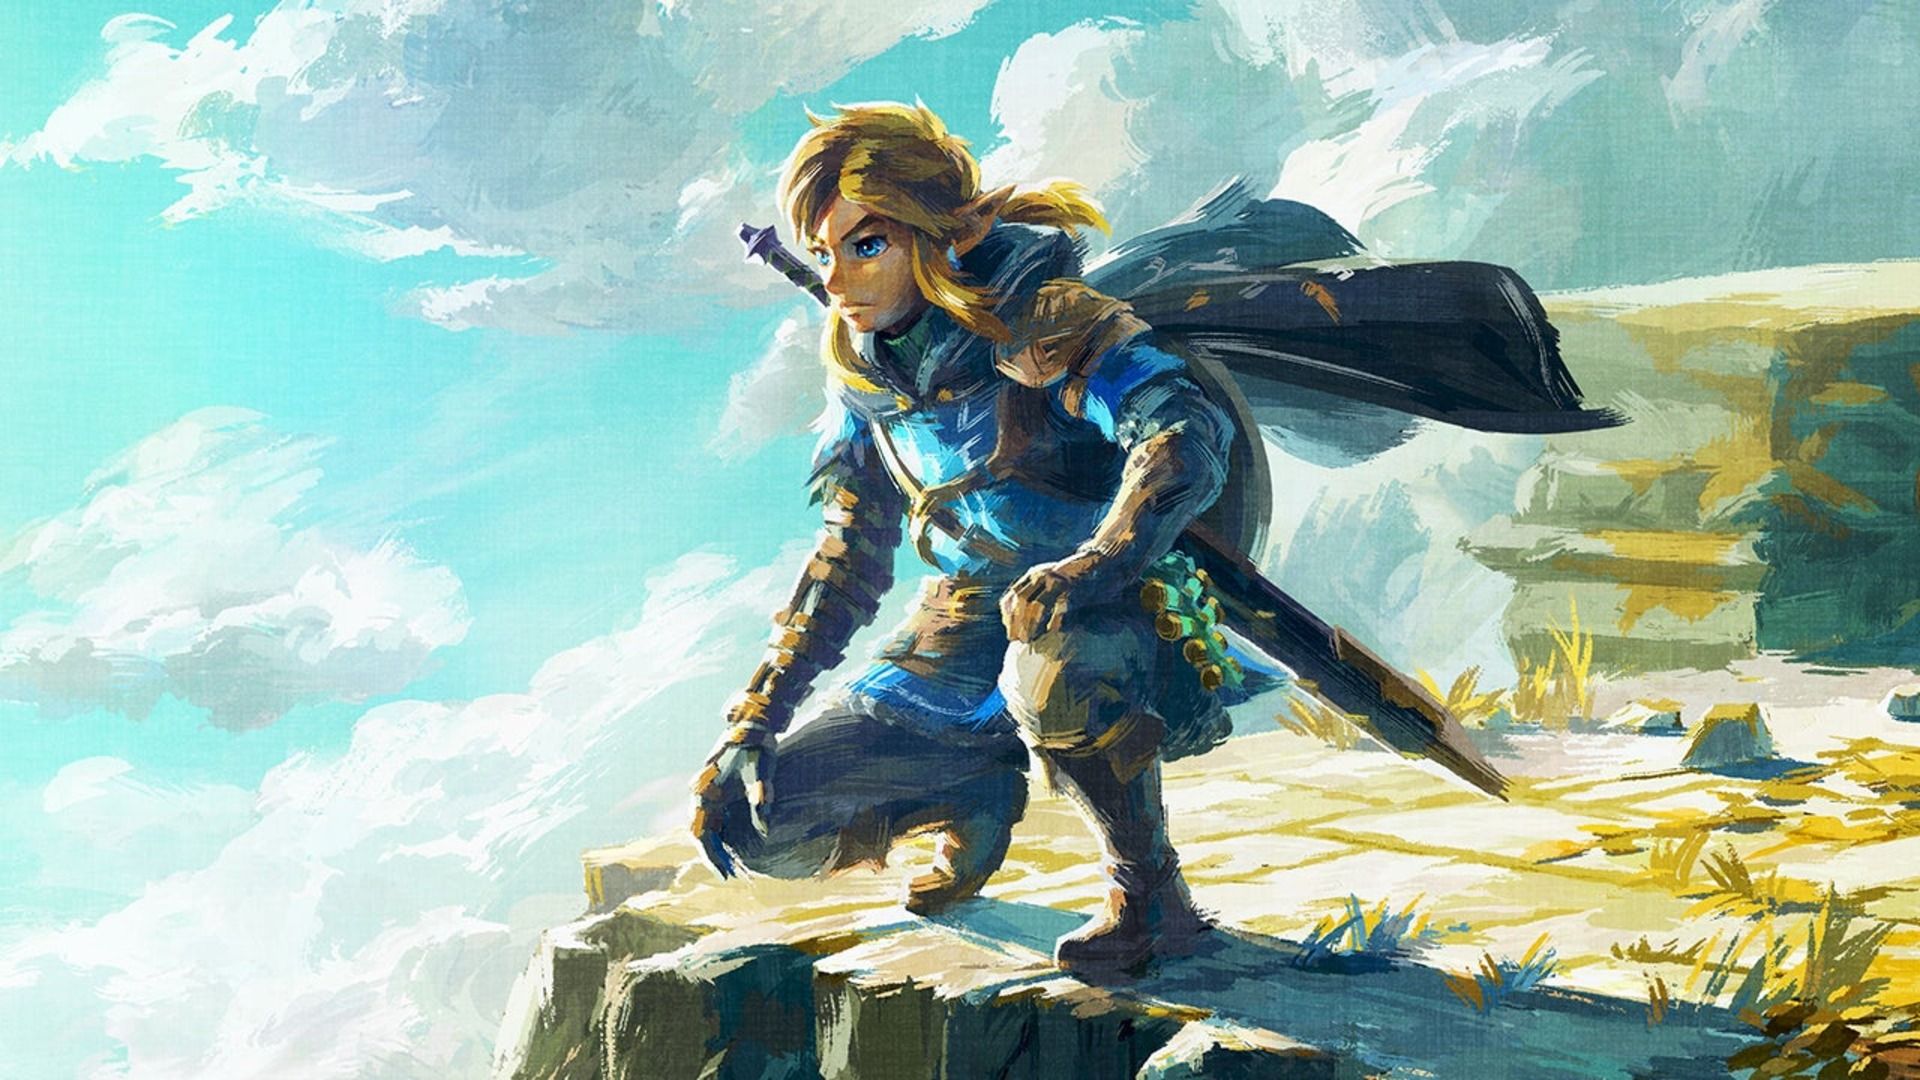 Zelda Tears of the Kingdom release date, trailers, and news TechRadar